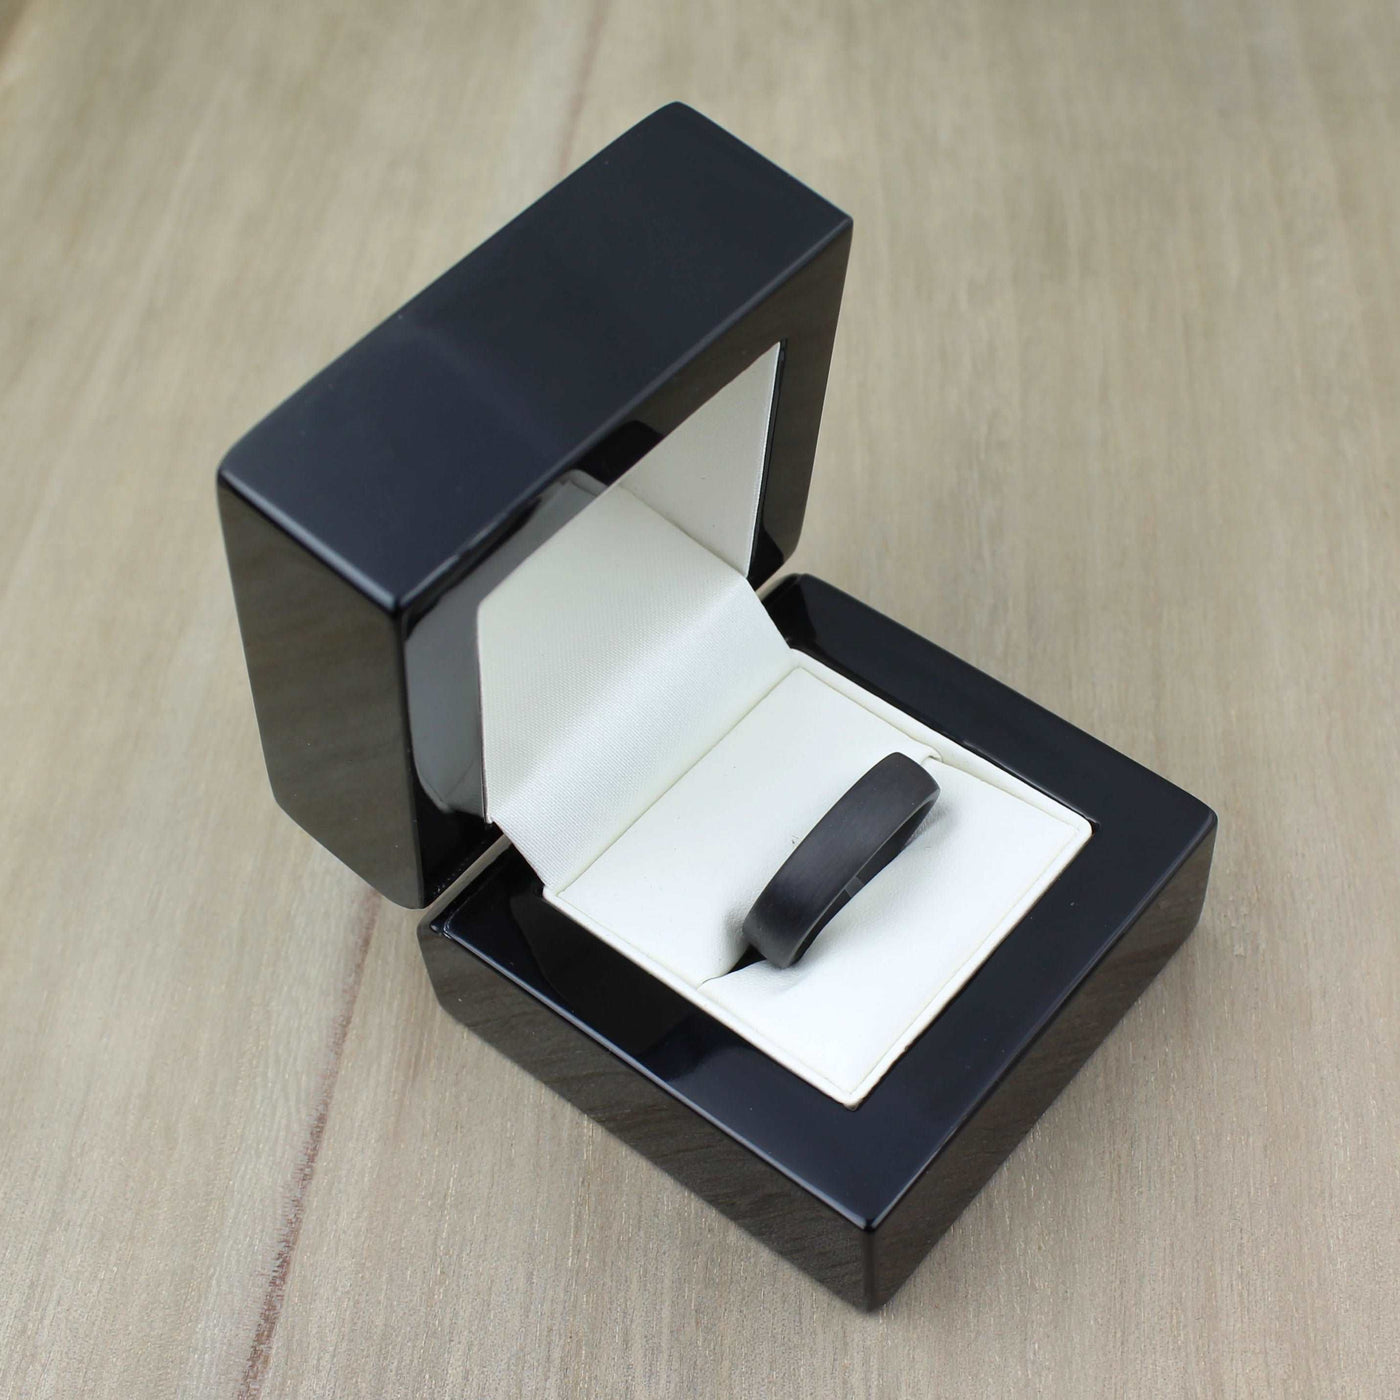 Black mans wedding ring ring band in carbon fibre. Court shape brushed 3mm 4mm